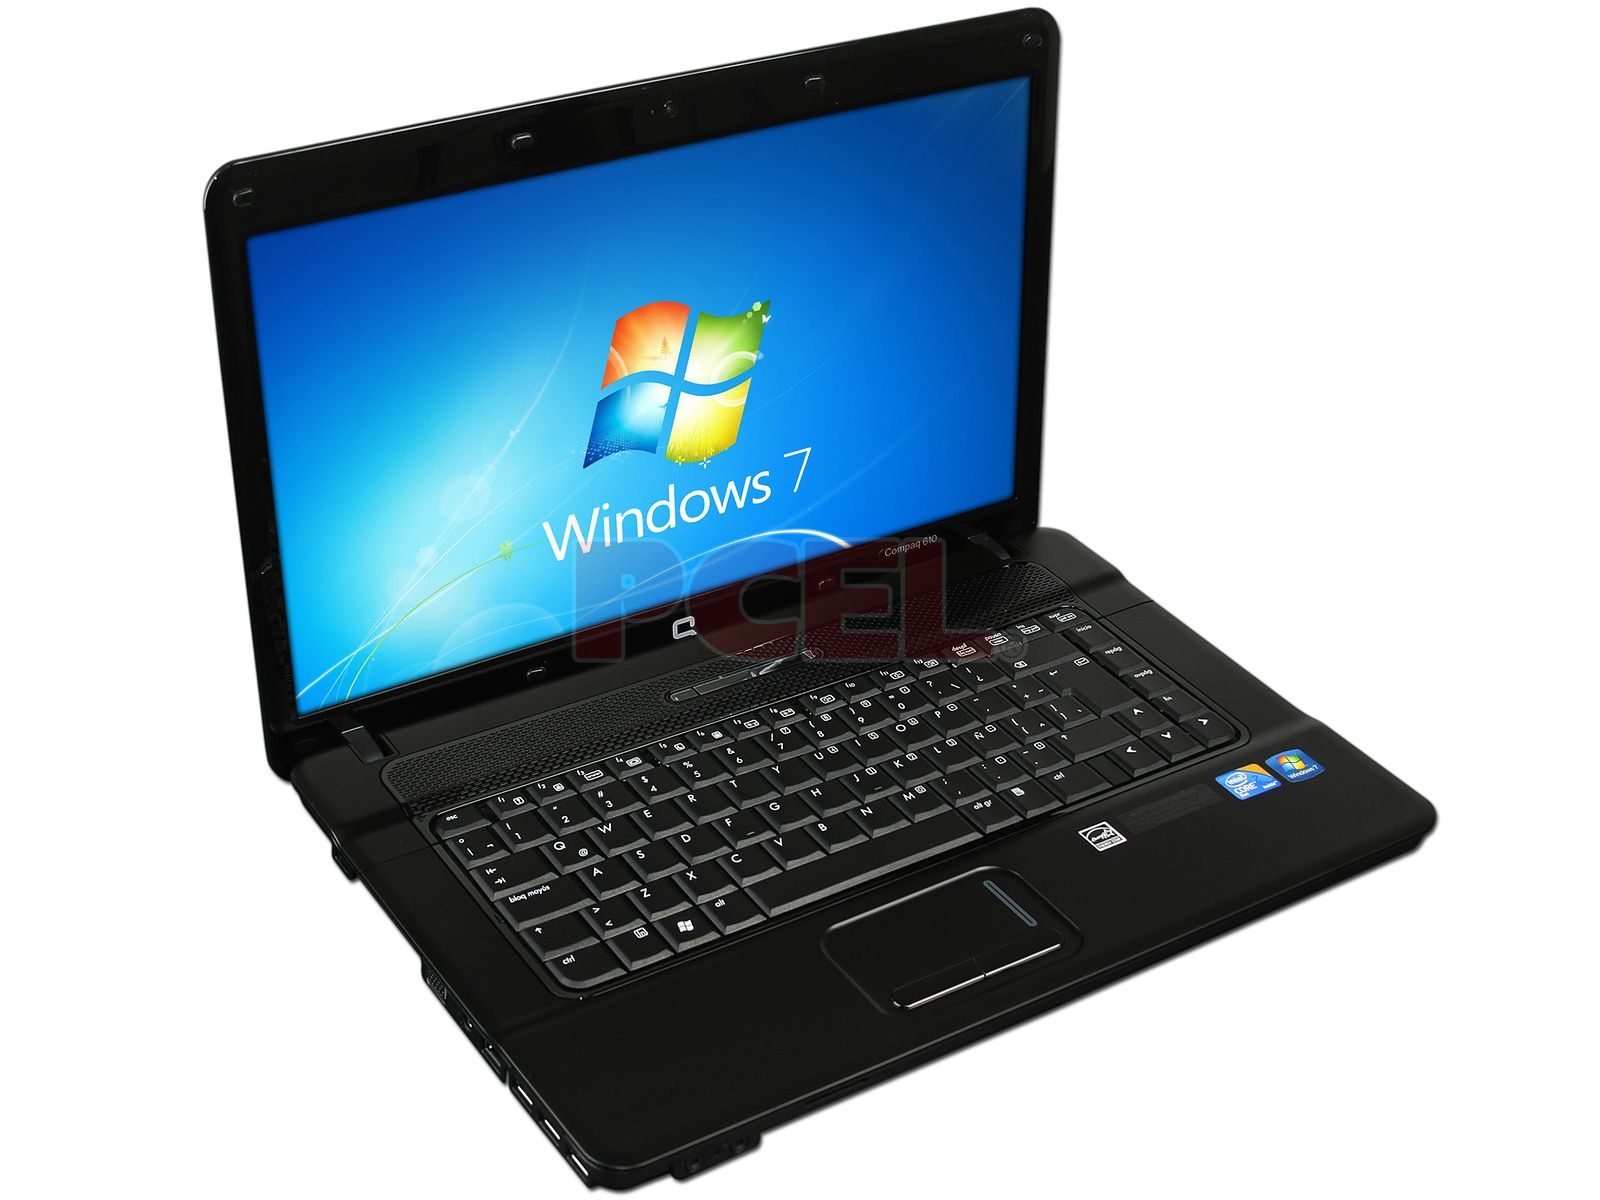 Laptop paq procesador intel core duo t ghz memoria de gb ddr ii disco duro de gb pantalla de dvdrw red inalãmbrica windows professional bits